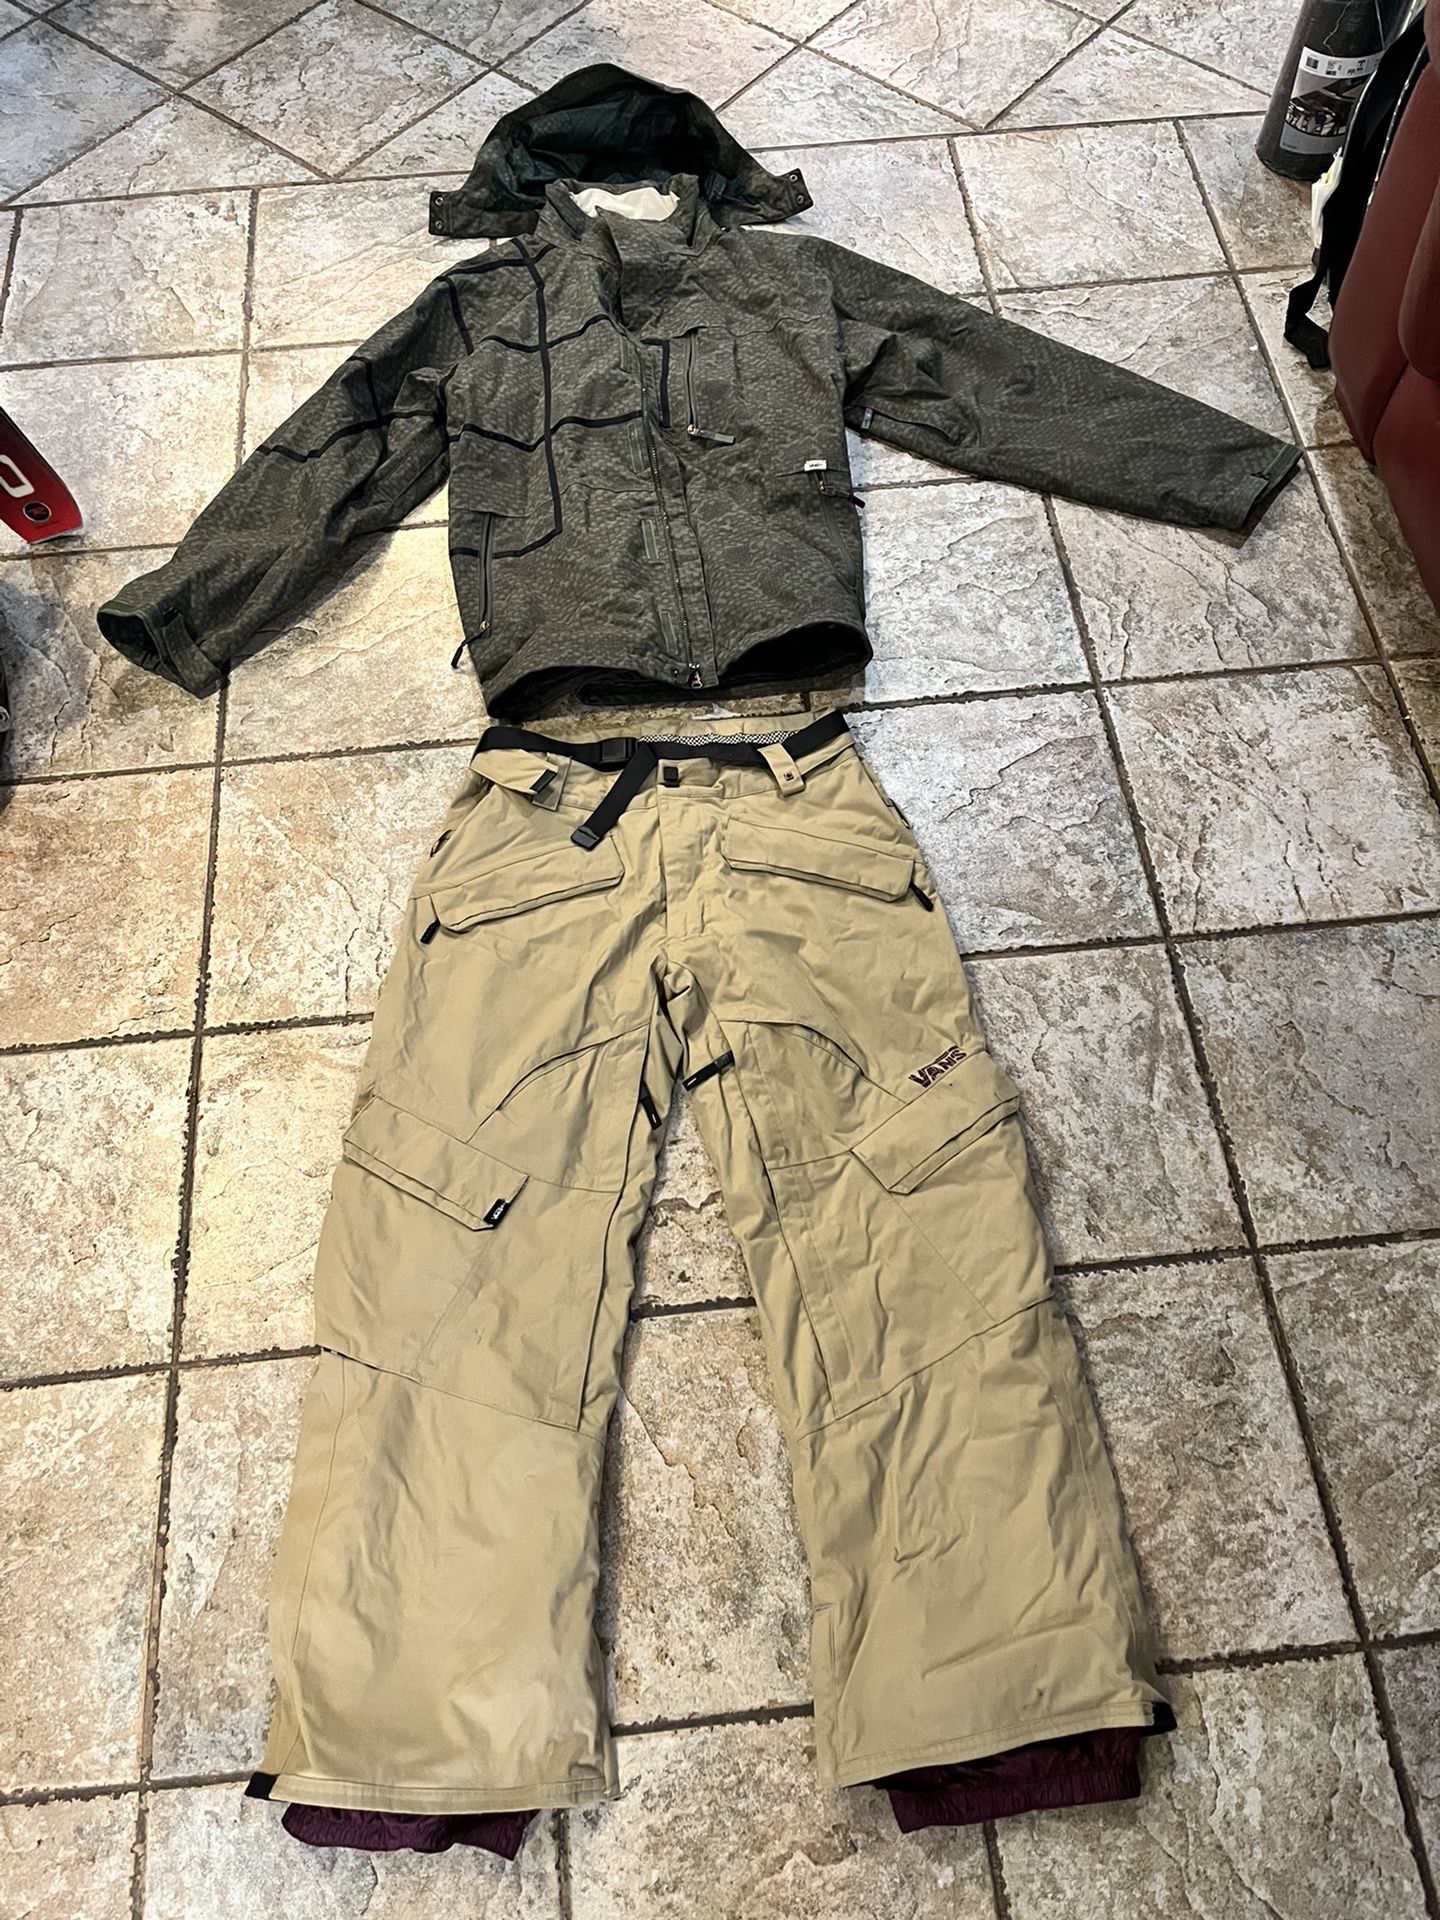 Large waterproof pants and jacket